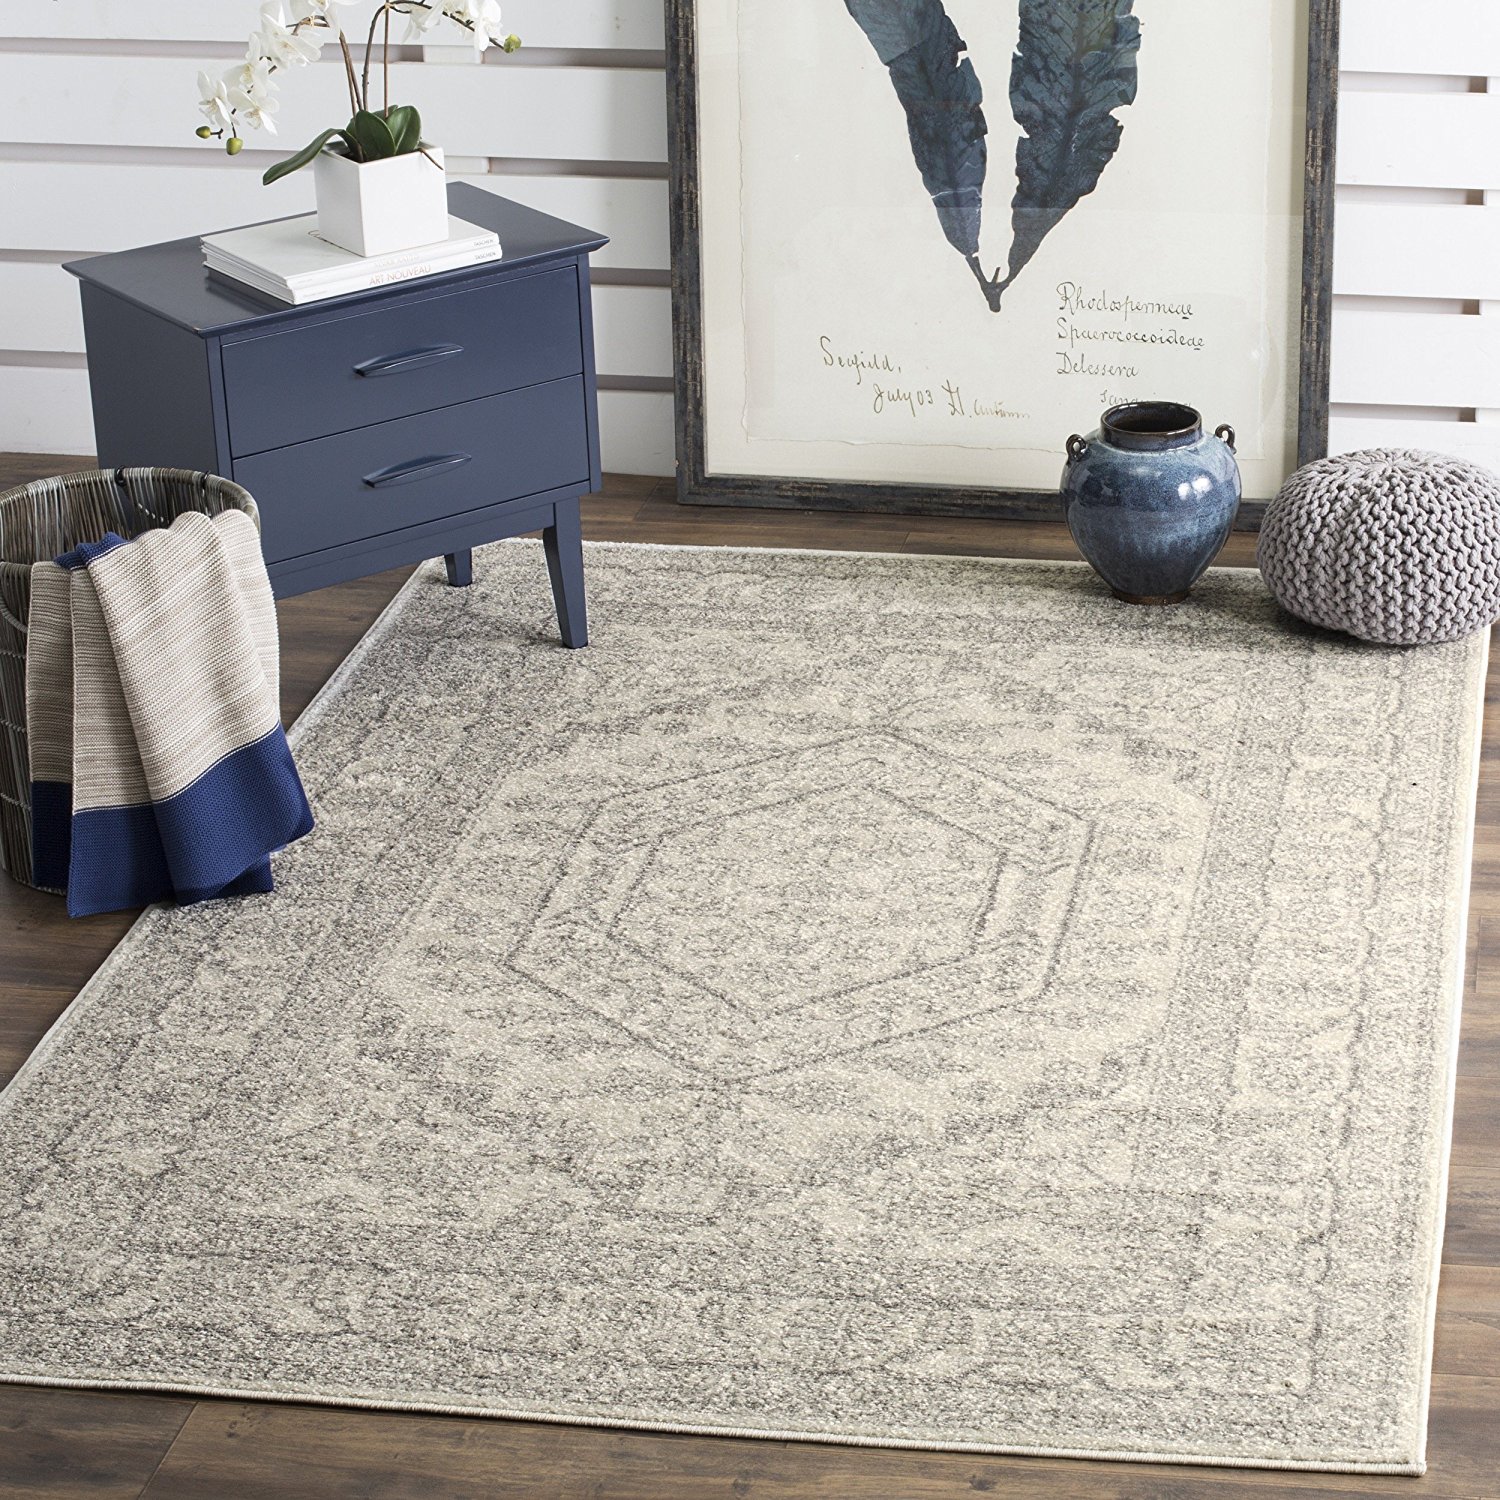 cheapest area rugs home interior: bonanza cheap area rugs 10 x 12 top 40 fantastic flooring ZOYAFNE